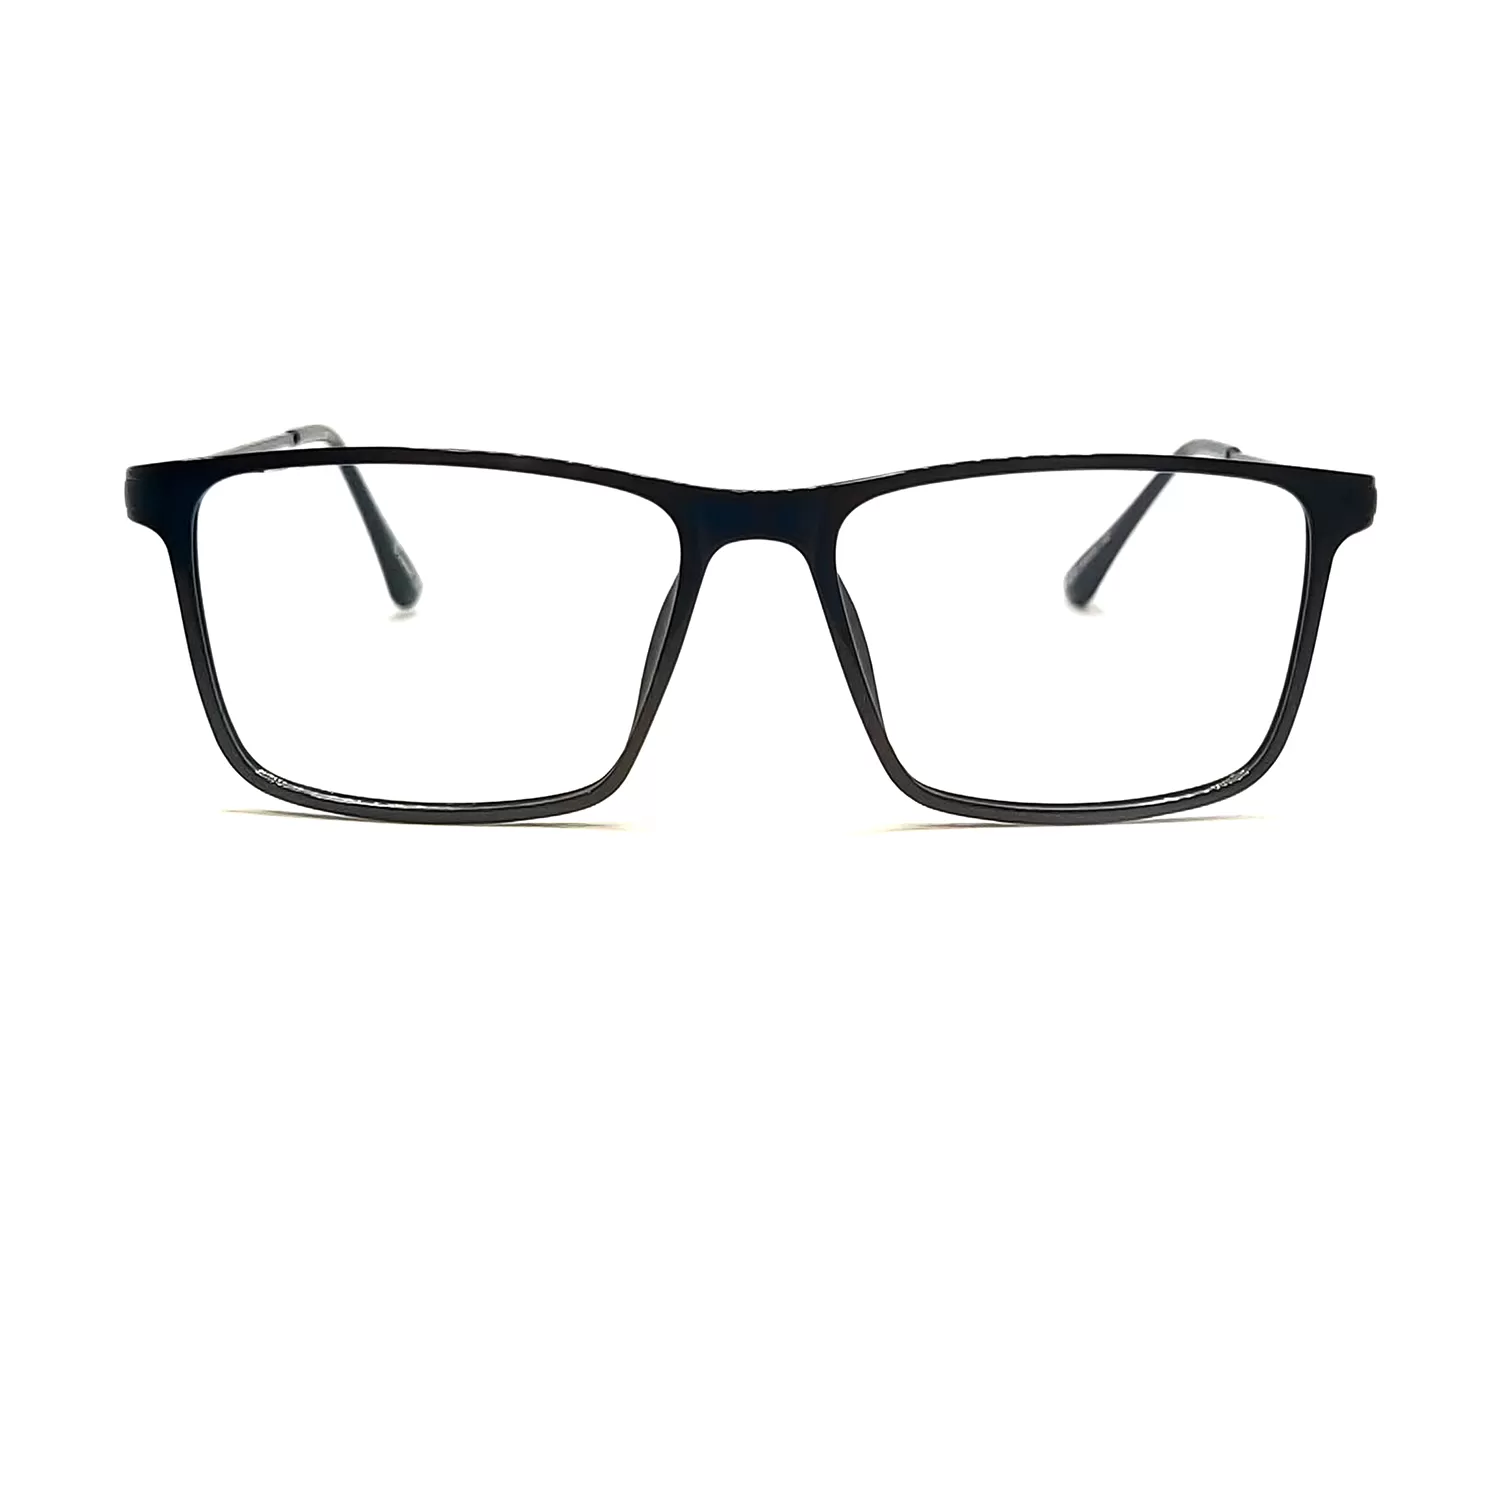 Black Rectangular eyeglasses online at chashmah.com